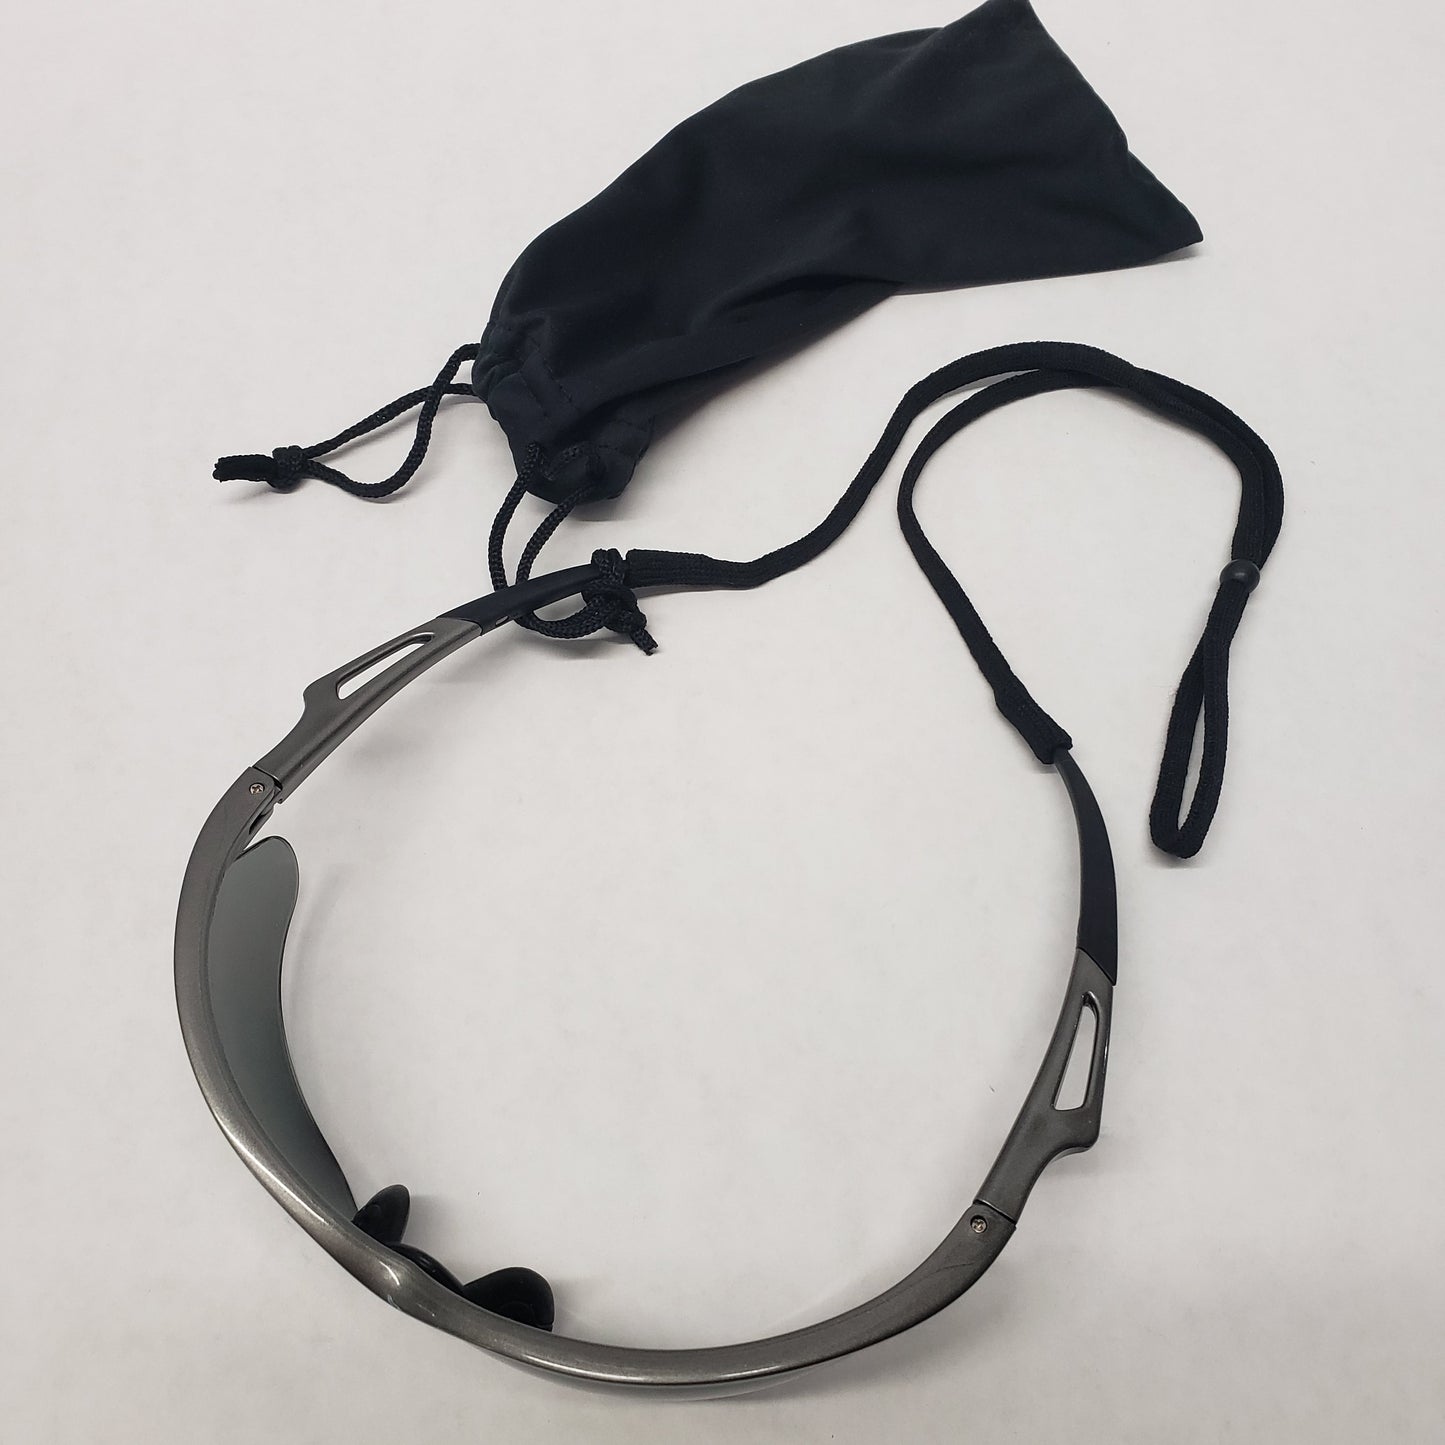 New Authentic Mercury Polarized Sunglasses Gray Frames Polarized Black Lens